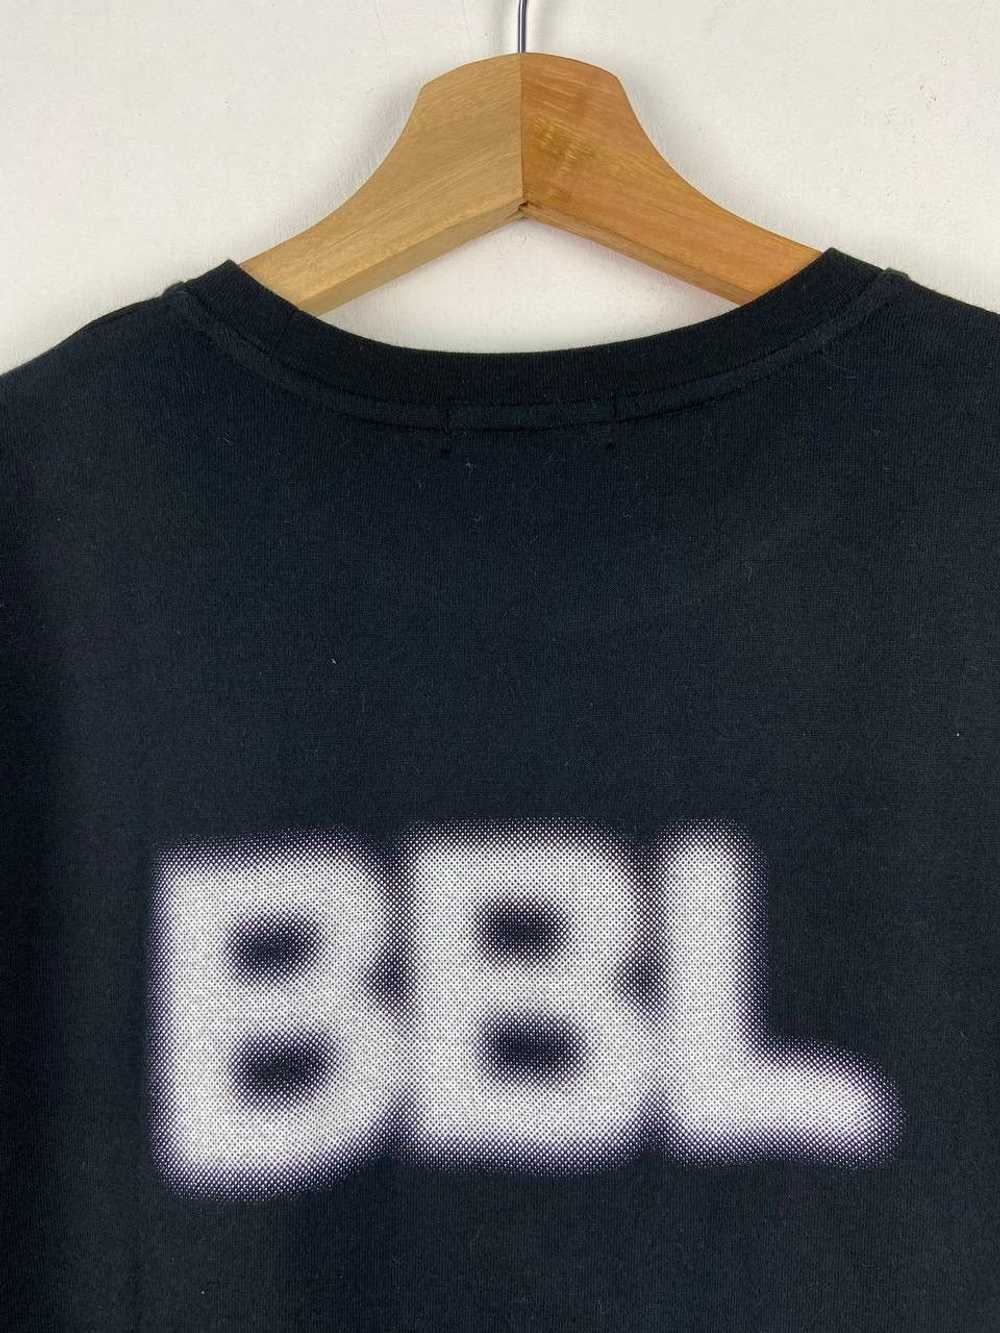 Burberry Burberry black label tshirt big logo - image 6